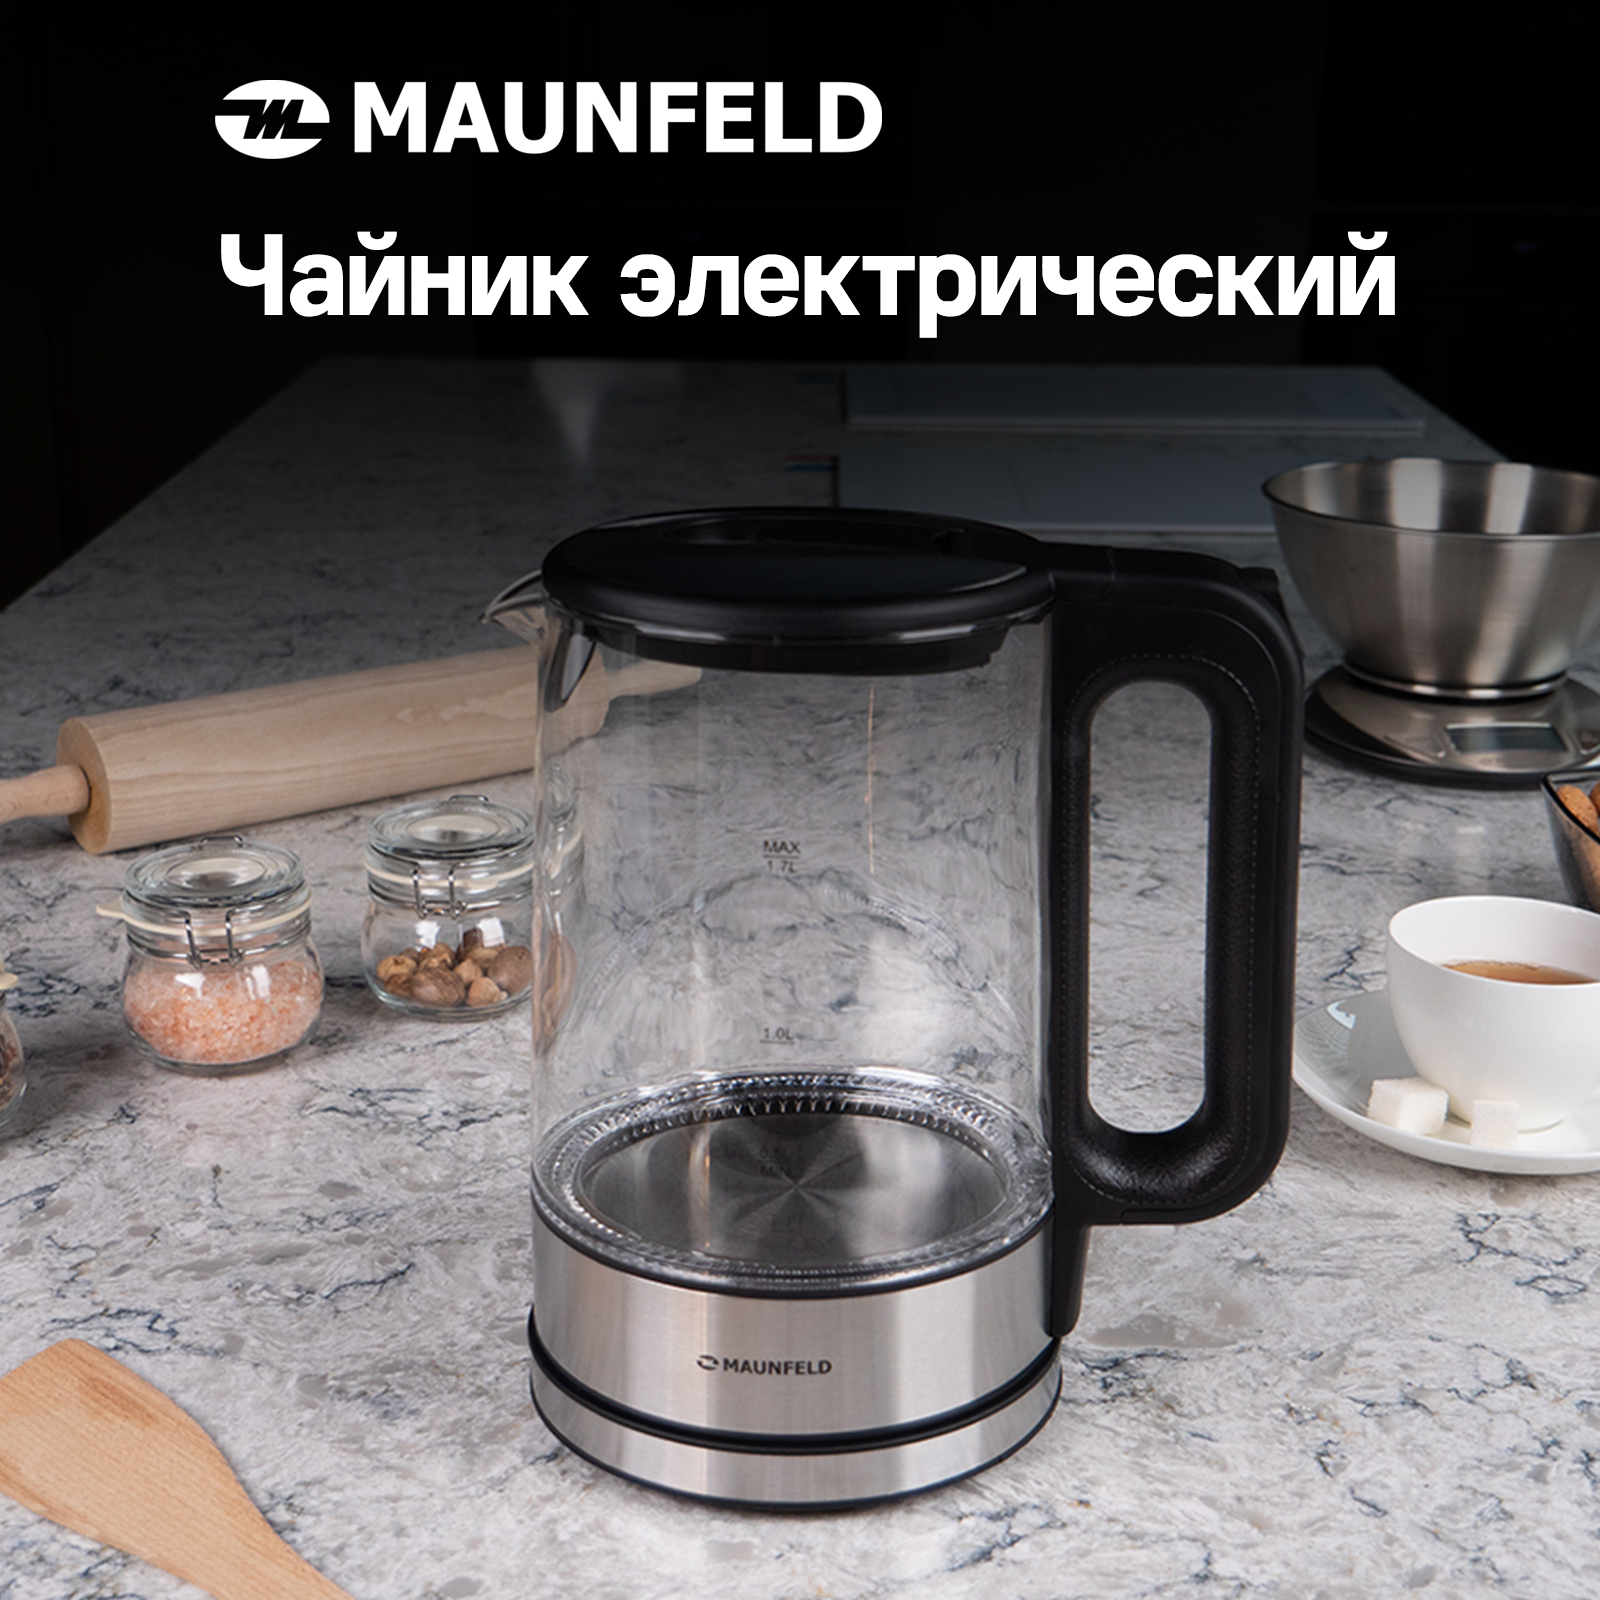 Электрический чайник MAUNFELD - фото №1